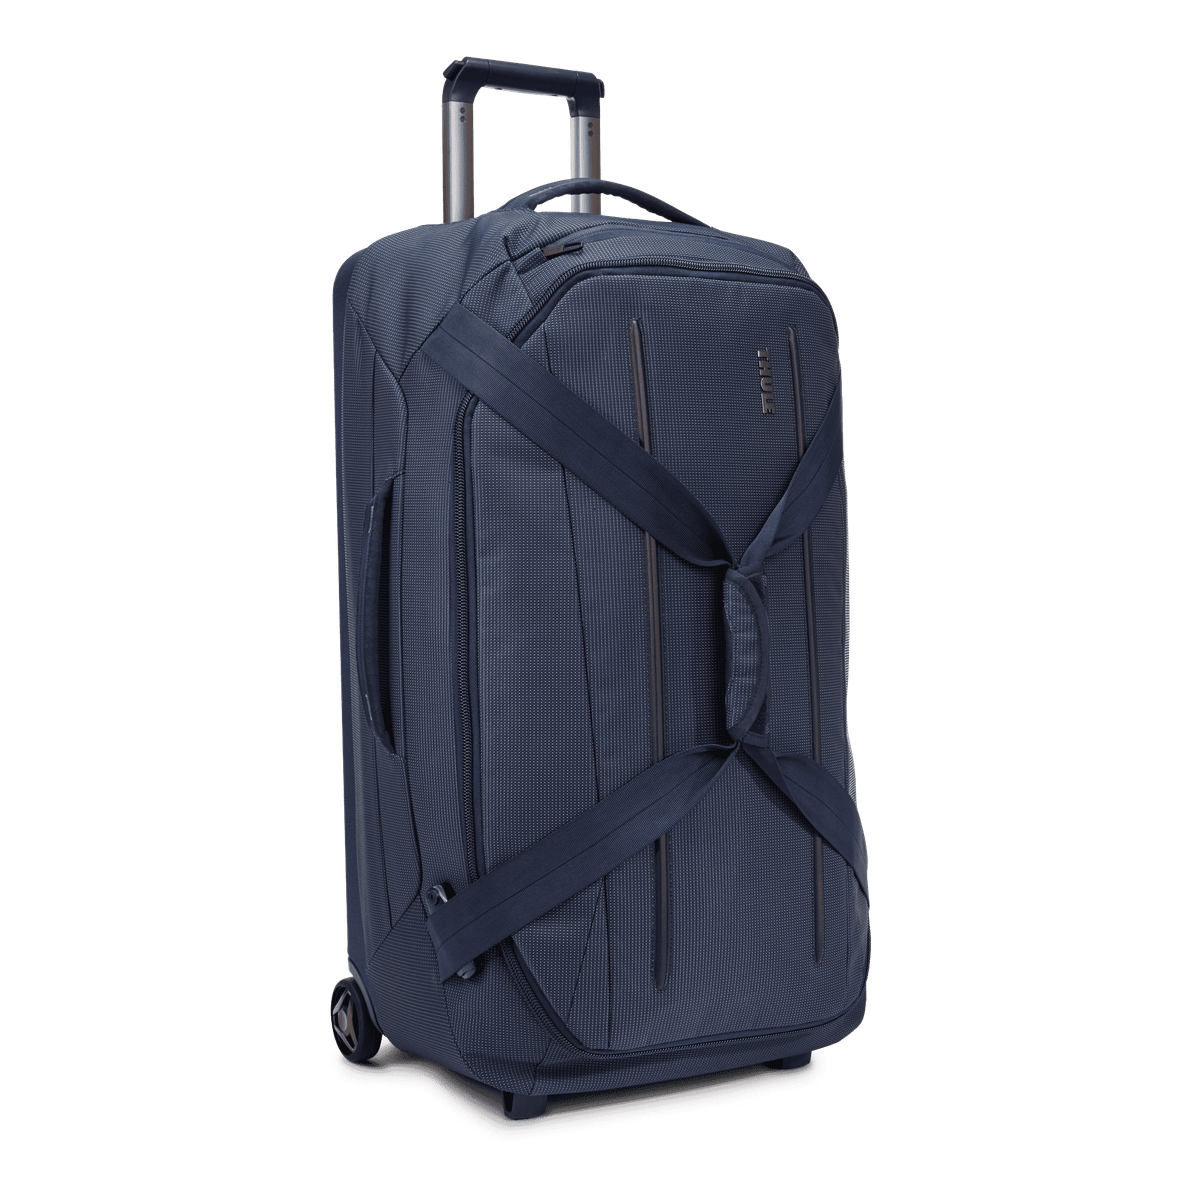 Thule Crossover 2 wheeled duffel bag 76cm/30" dress blue